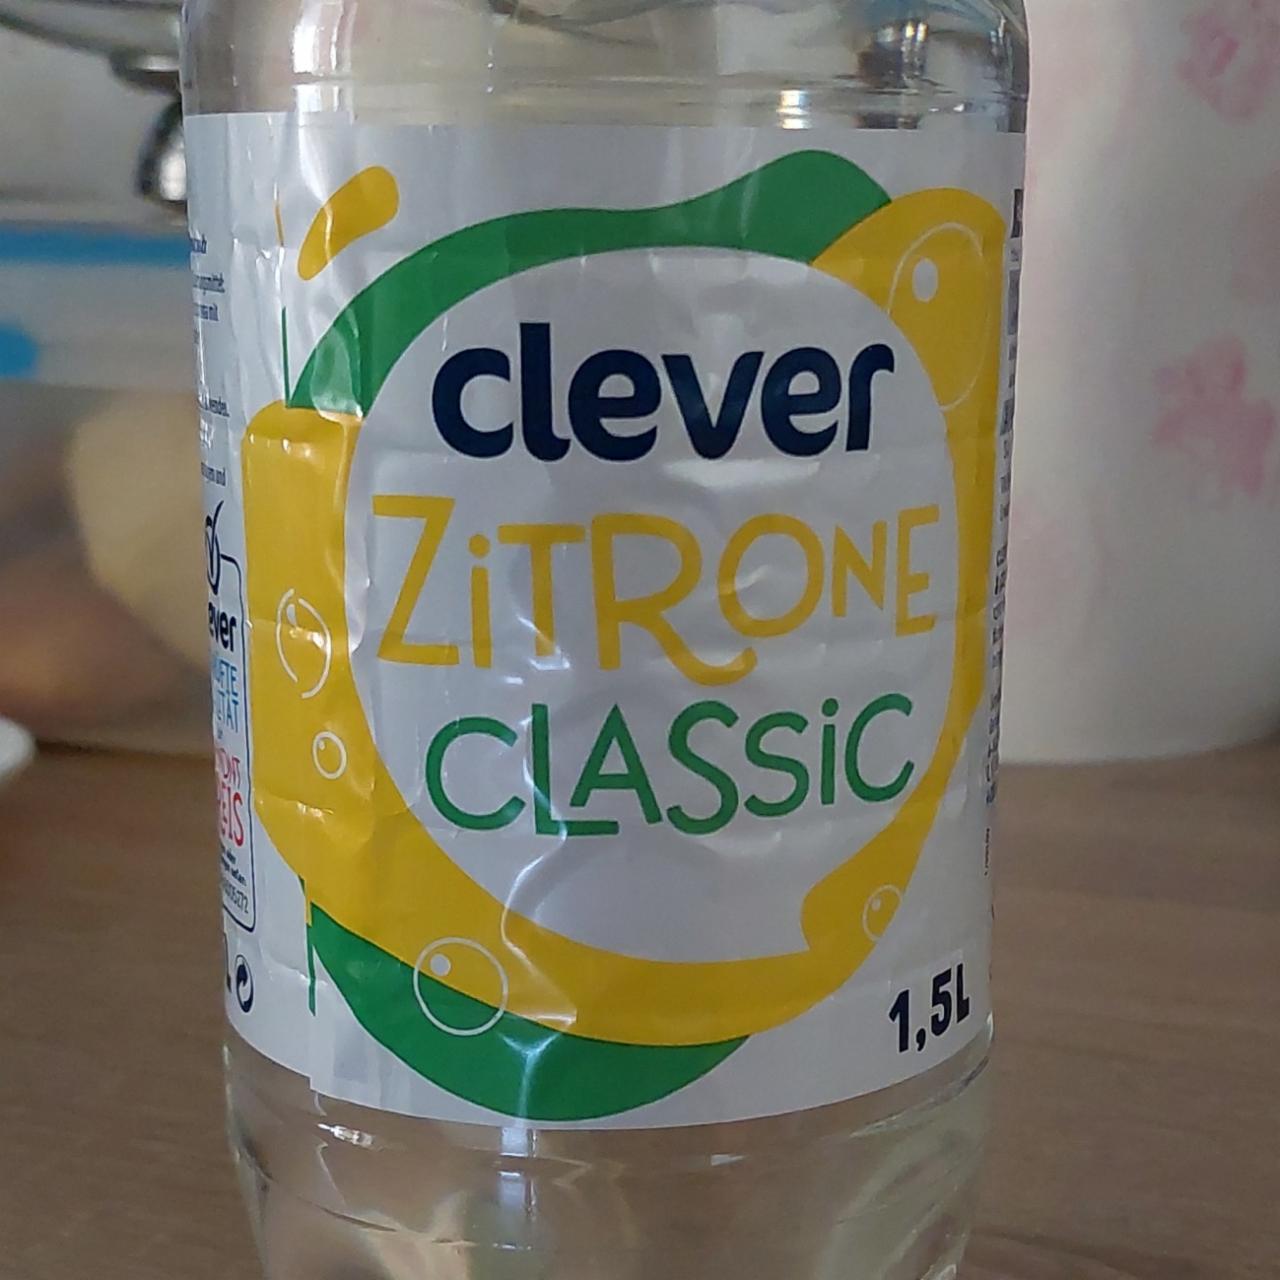 Képek - Zitrone classic Clever